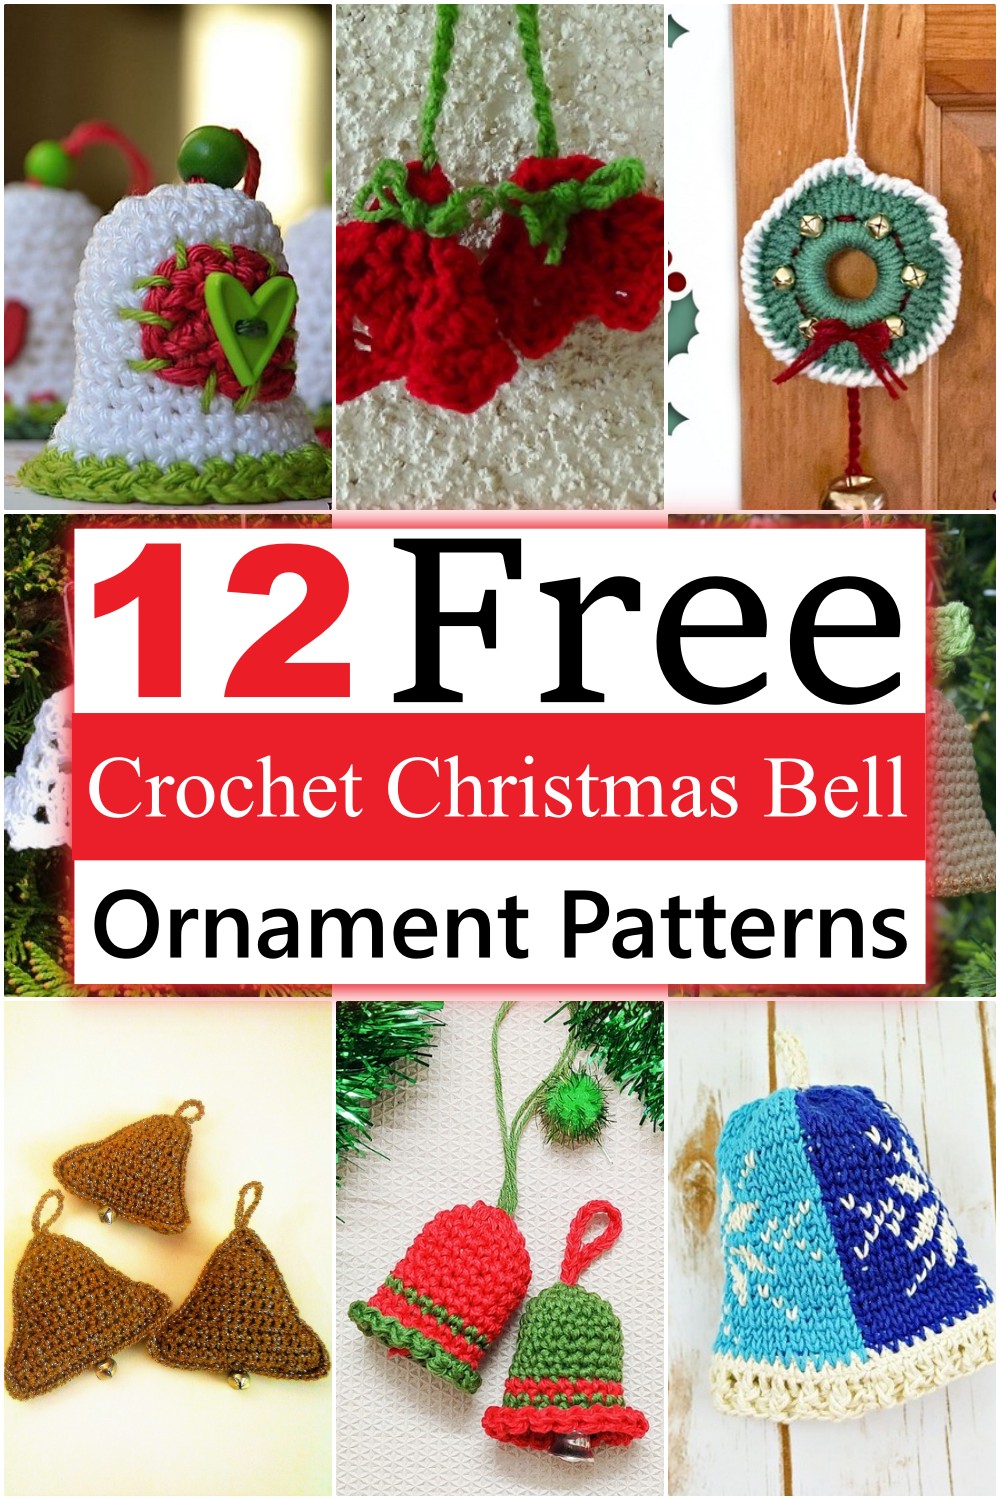 Crochet Christmas Bell Ornament Patterns